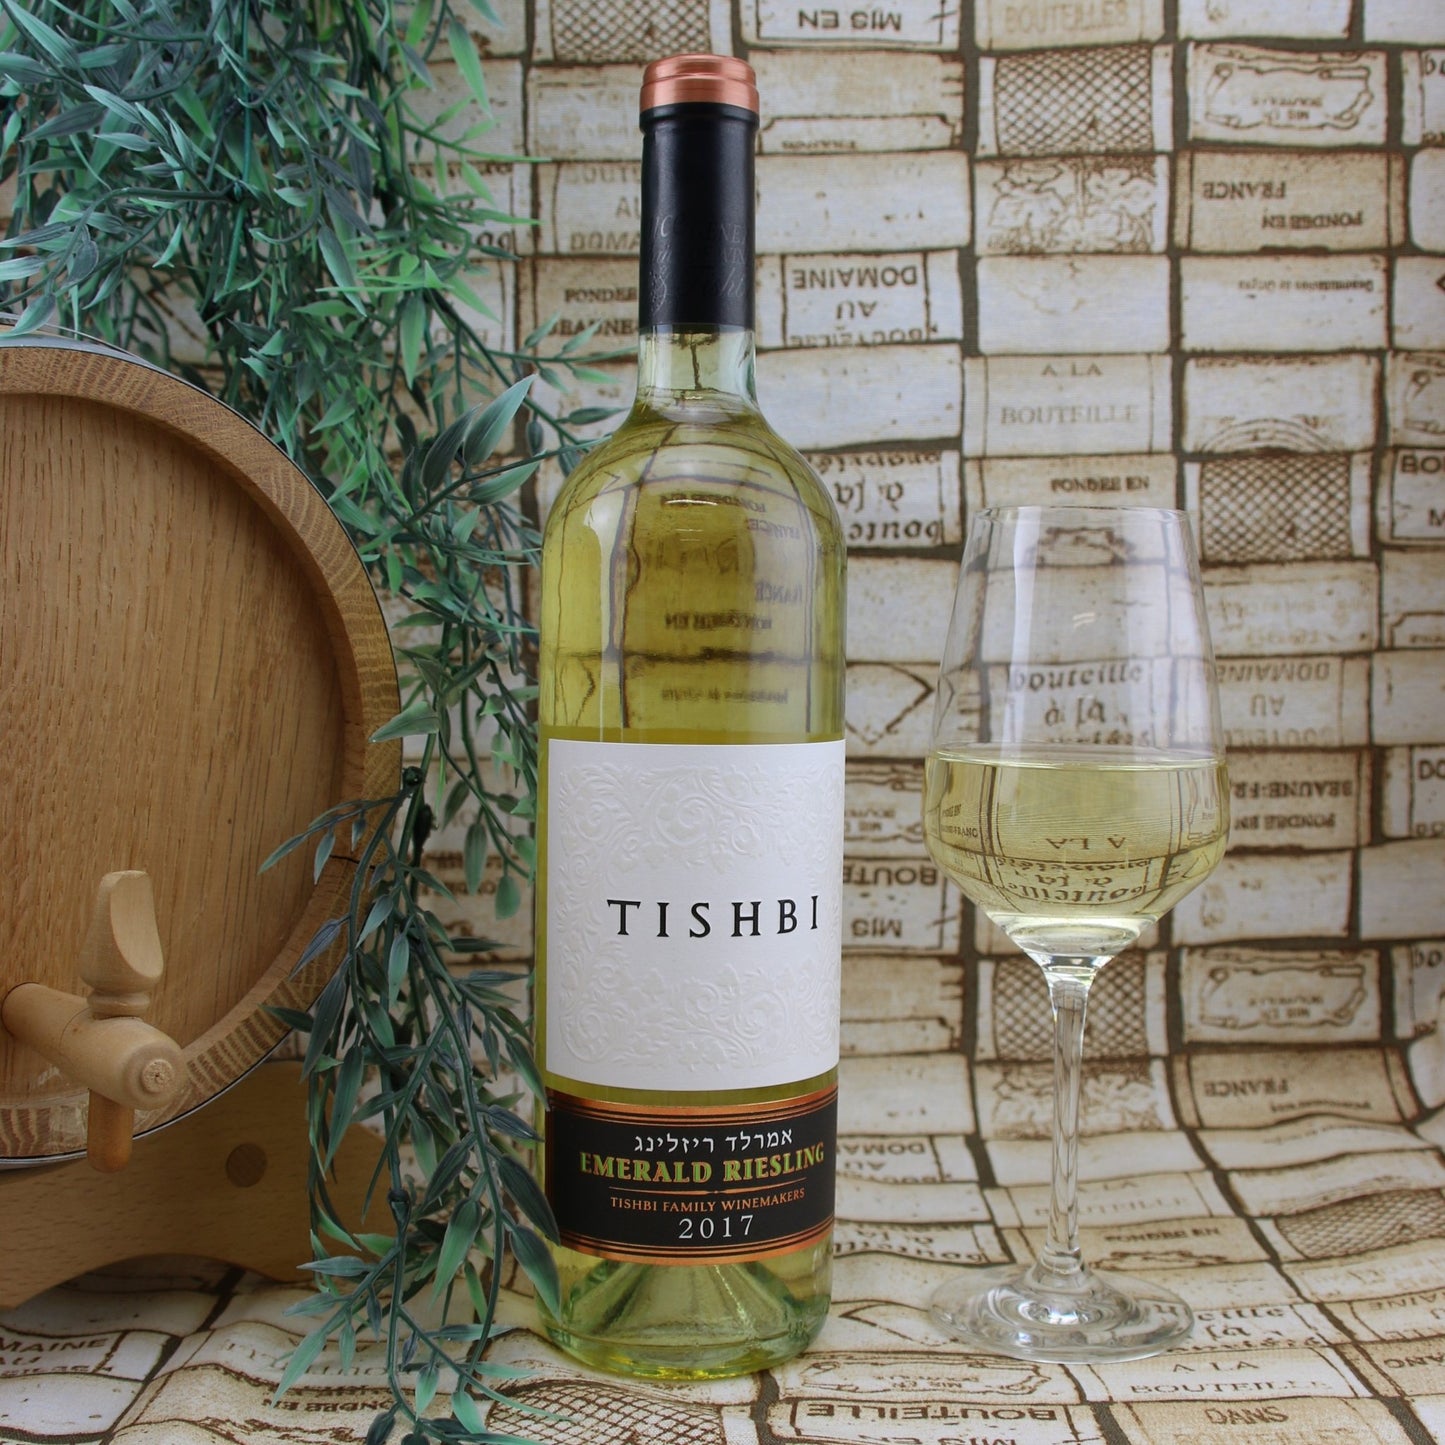 Tishbi Emerald Riesling - Israelwein